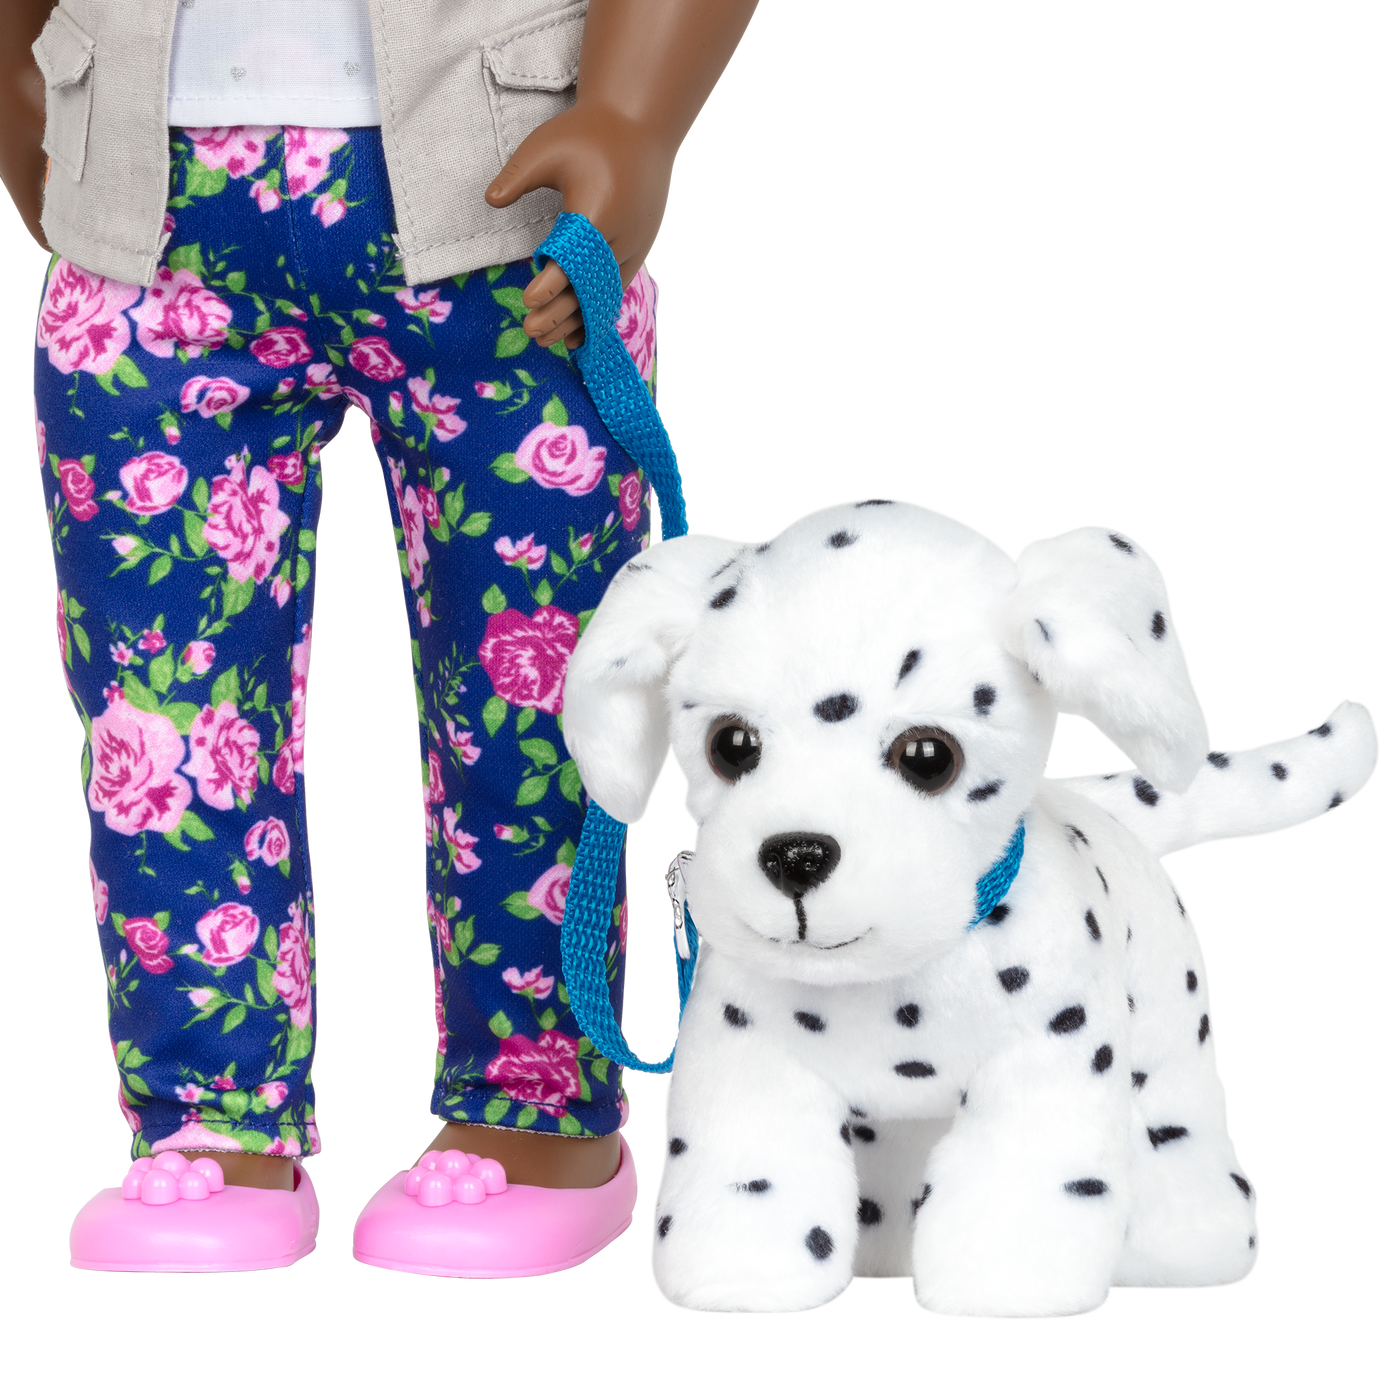 Dalmatian dog plushie in pet carrier